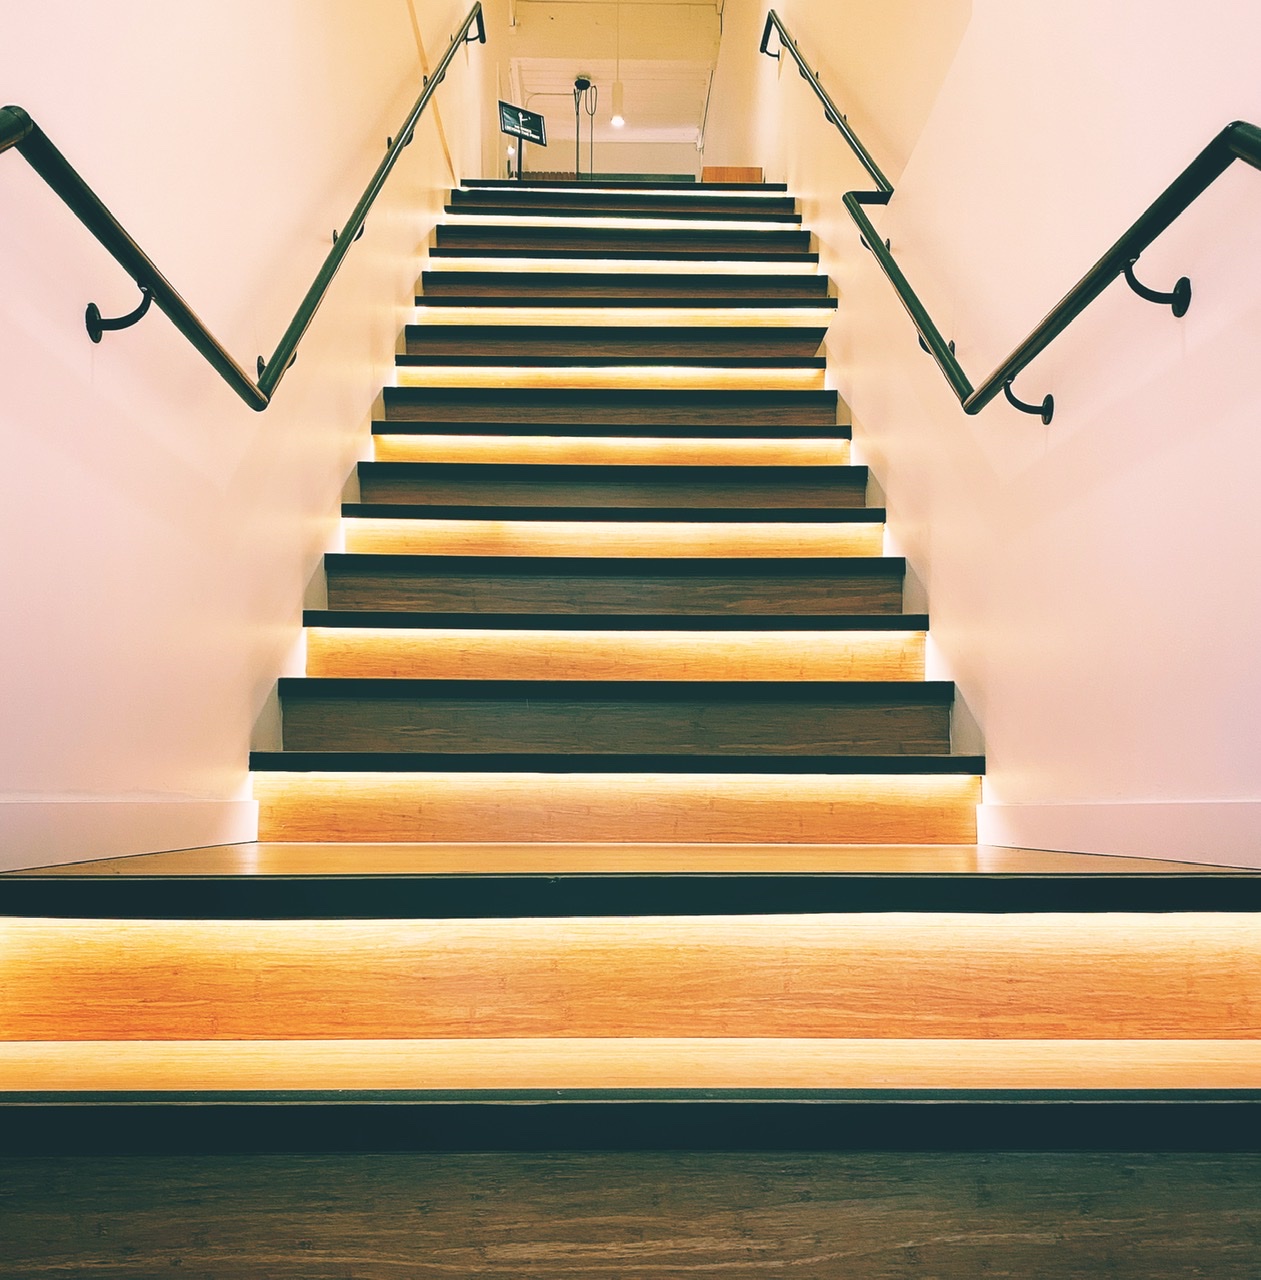 Stairways to yoga